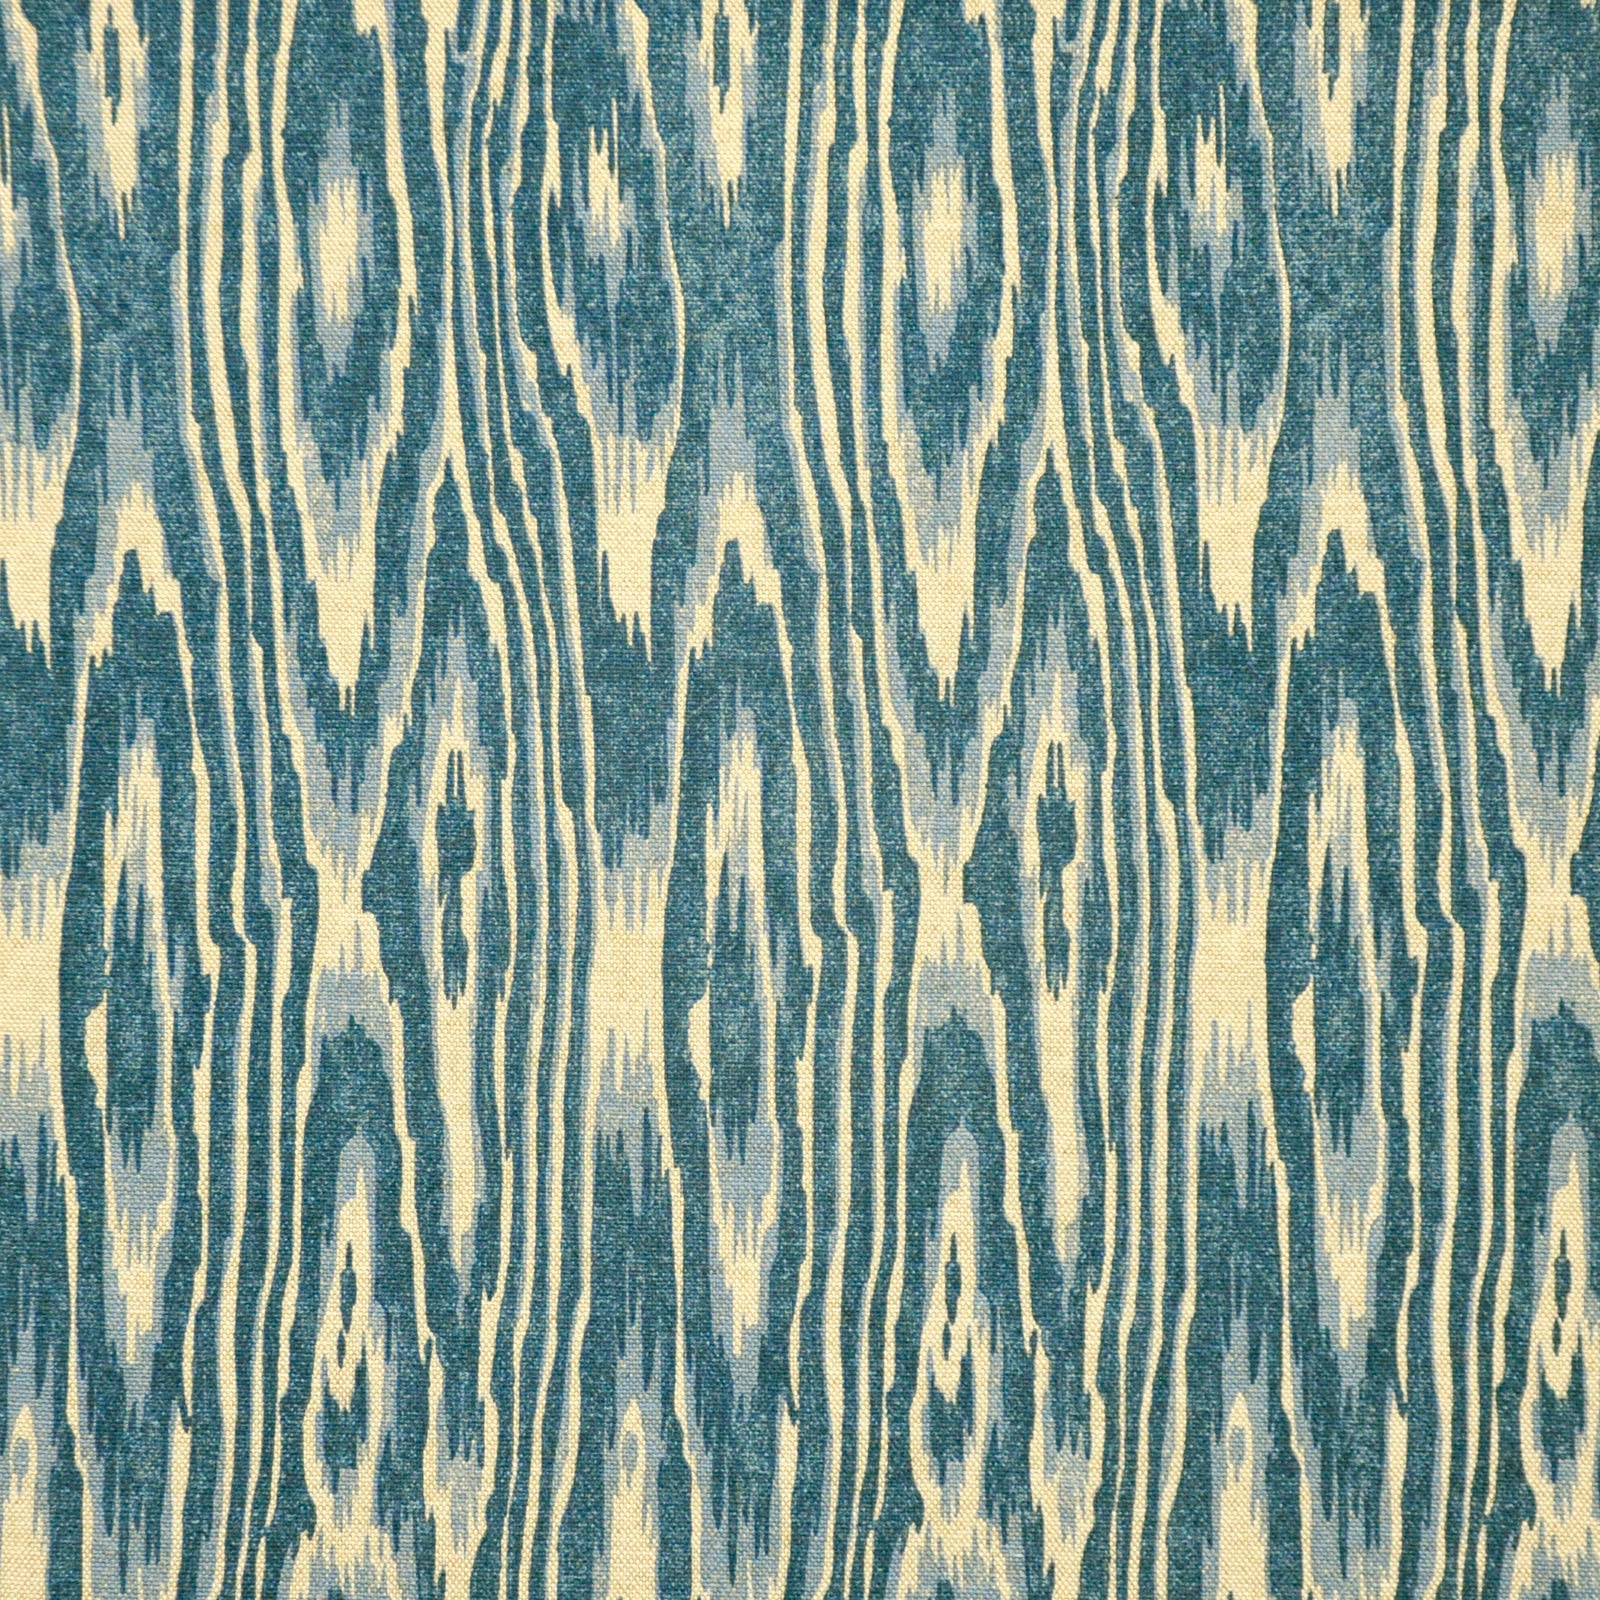 Purchase Maxwell Fabric - Bosco, # 540 Bluebell